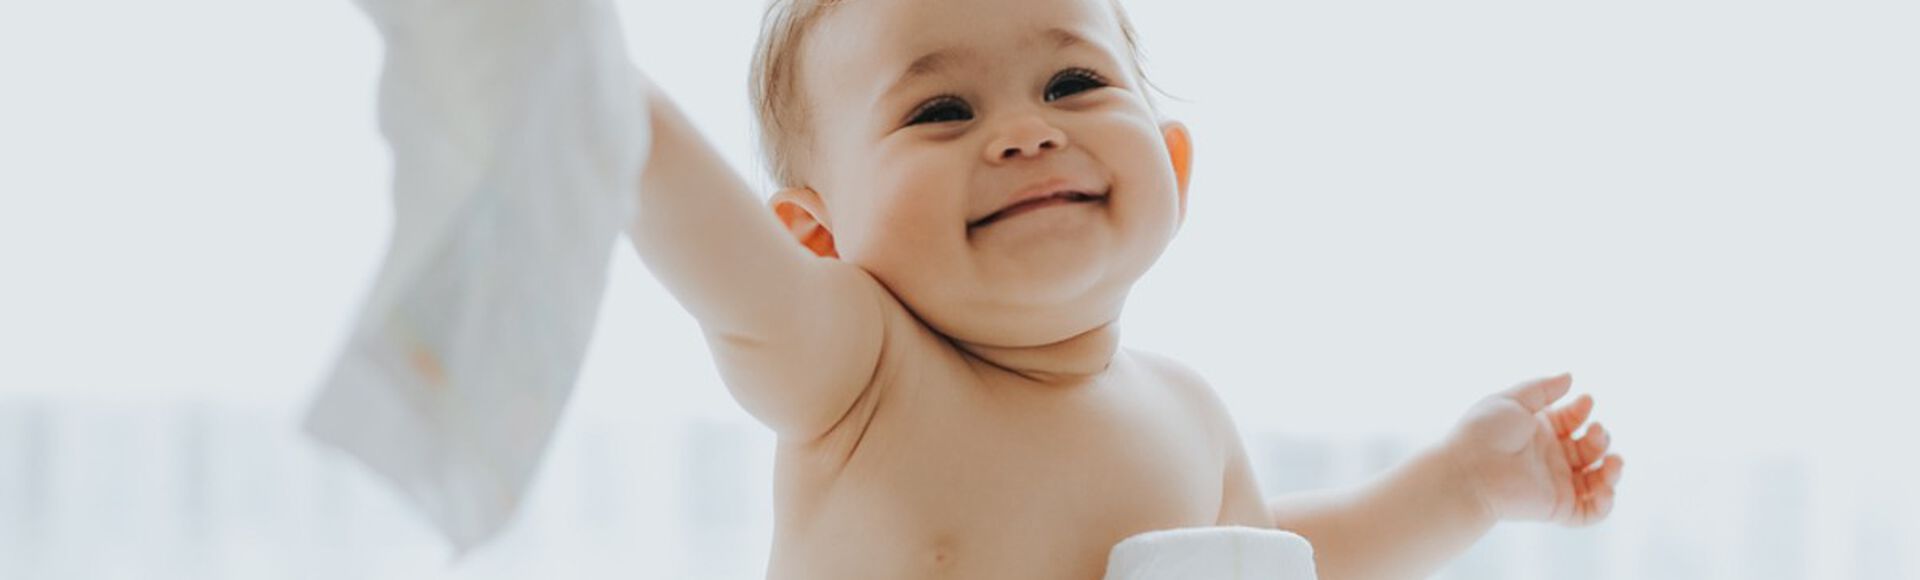 Bebê  sorridente sentado junto a pilha de fraldas